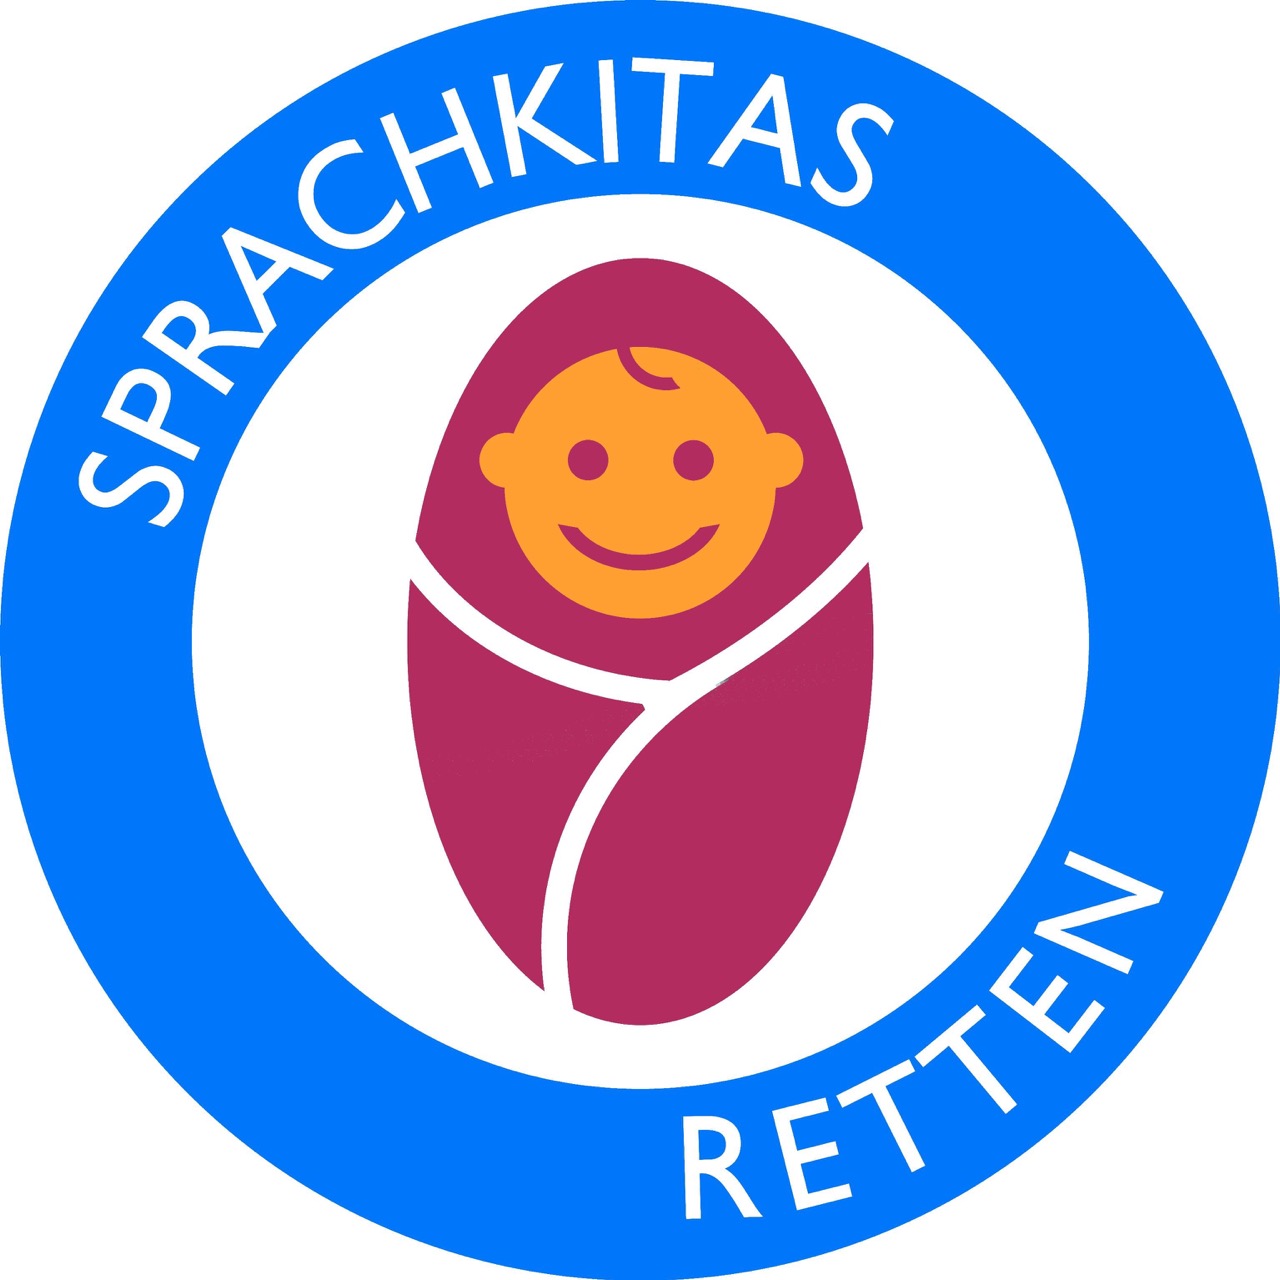 sprachkitas retten logo web